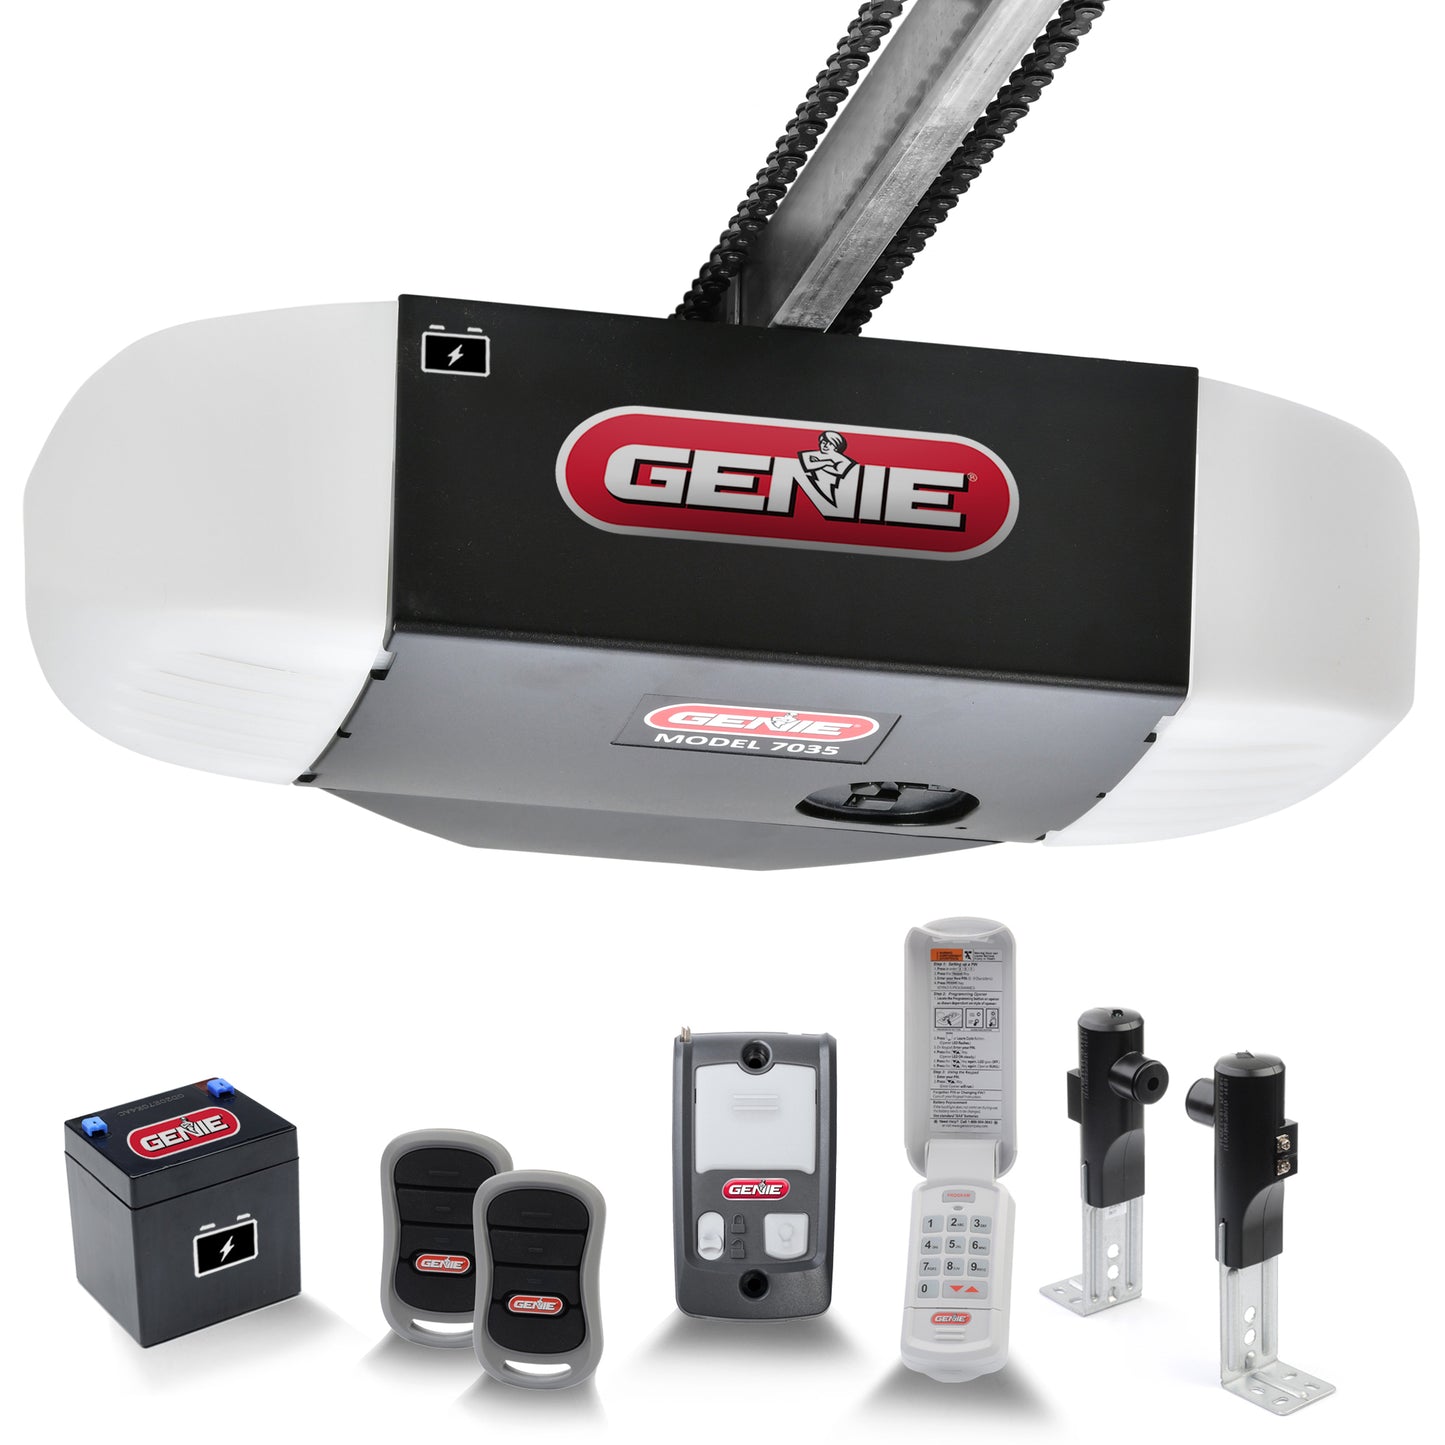 Genie ChainDrive 750 3/4 HPc Durable Chain Drive Garage Door Opener with Battery Backup